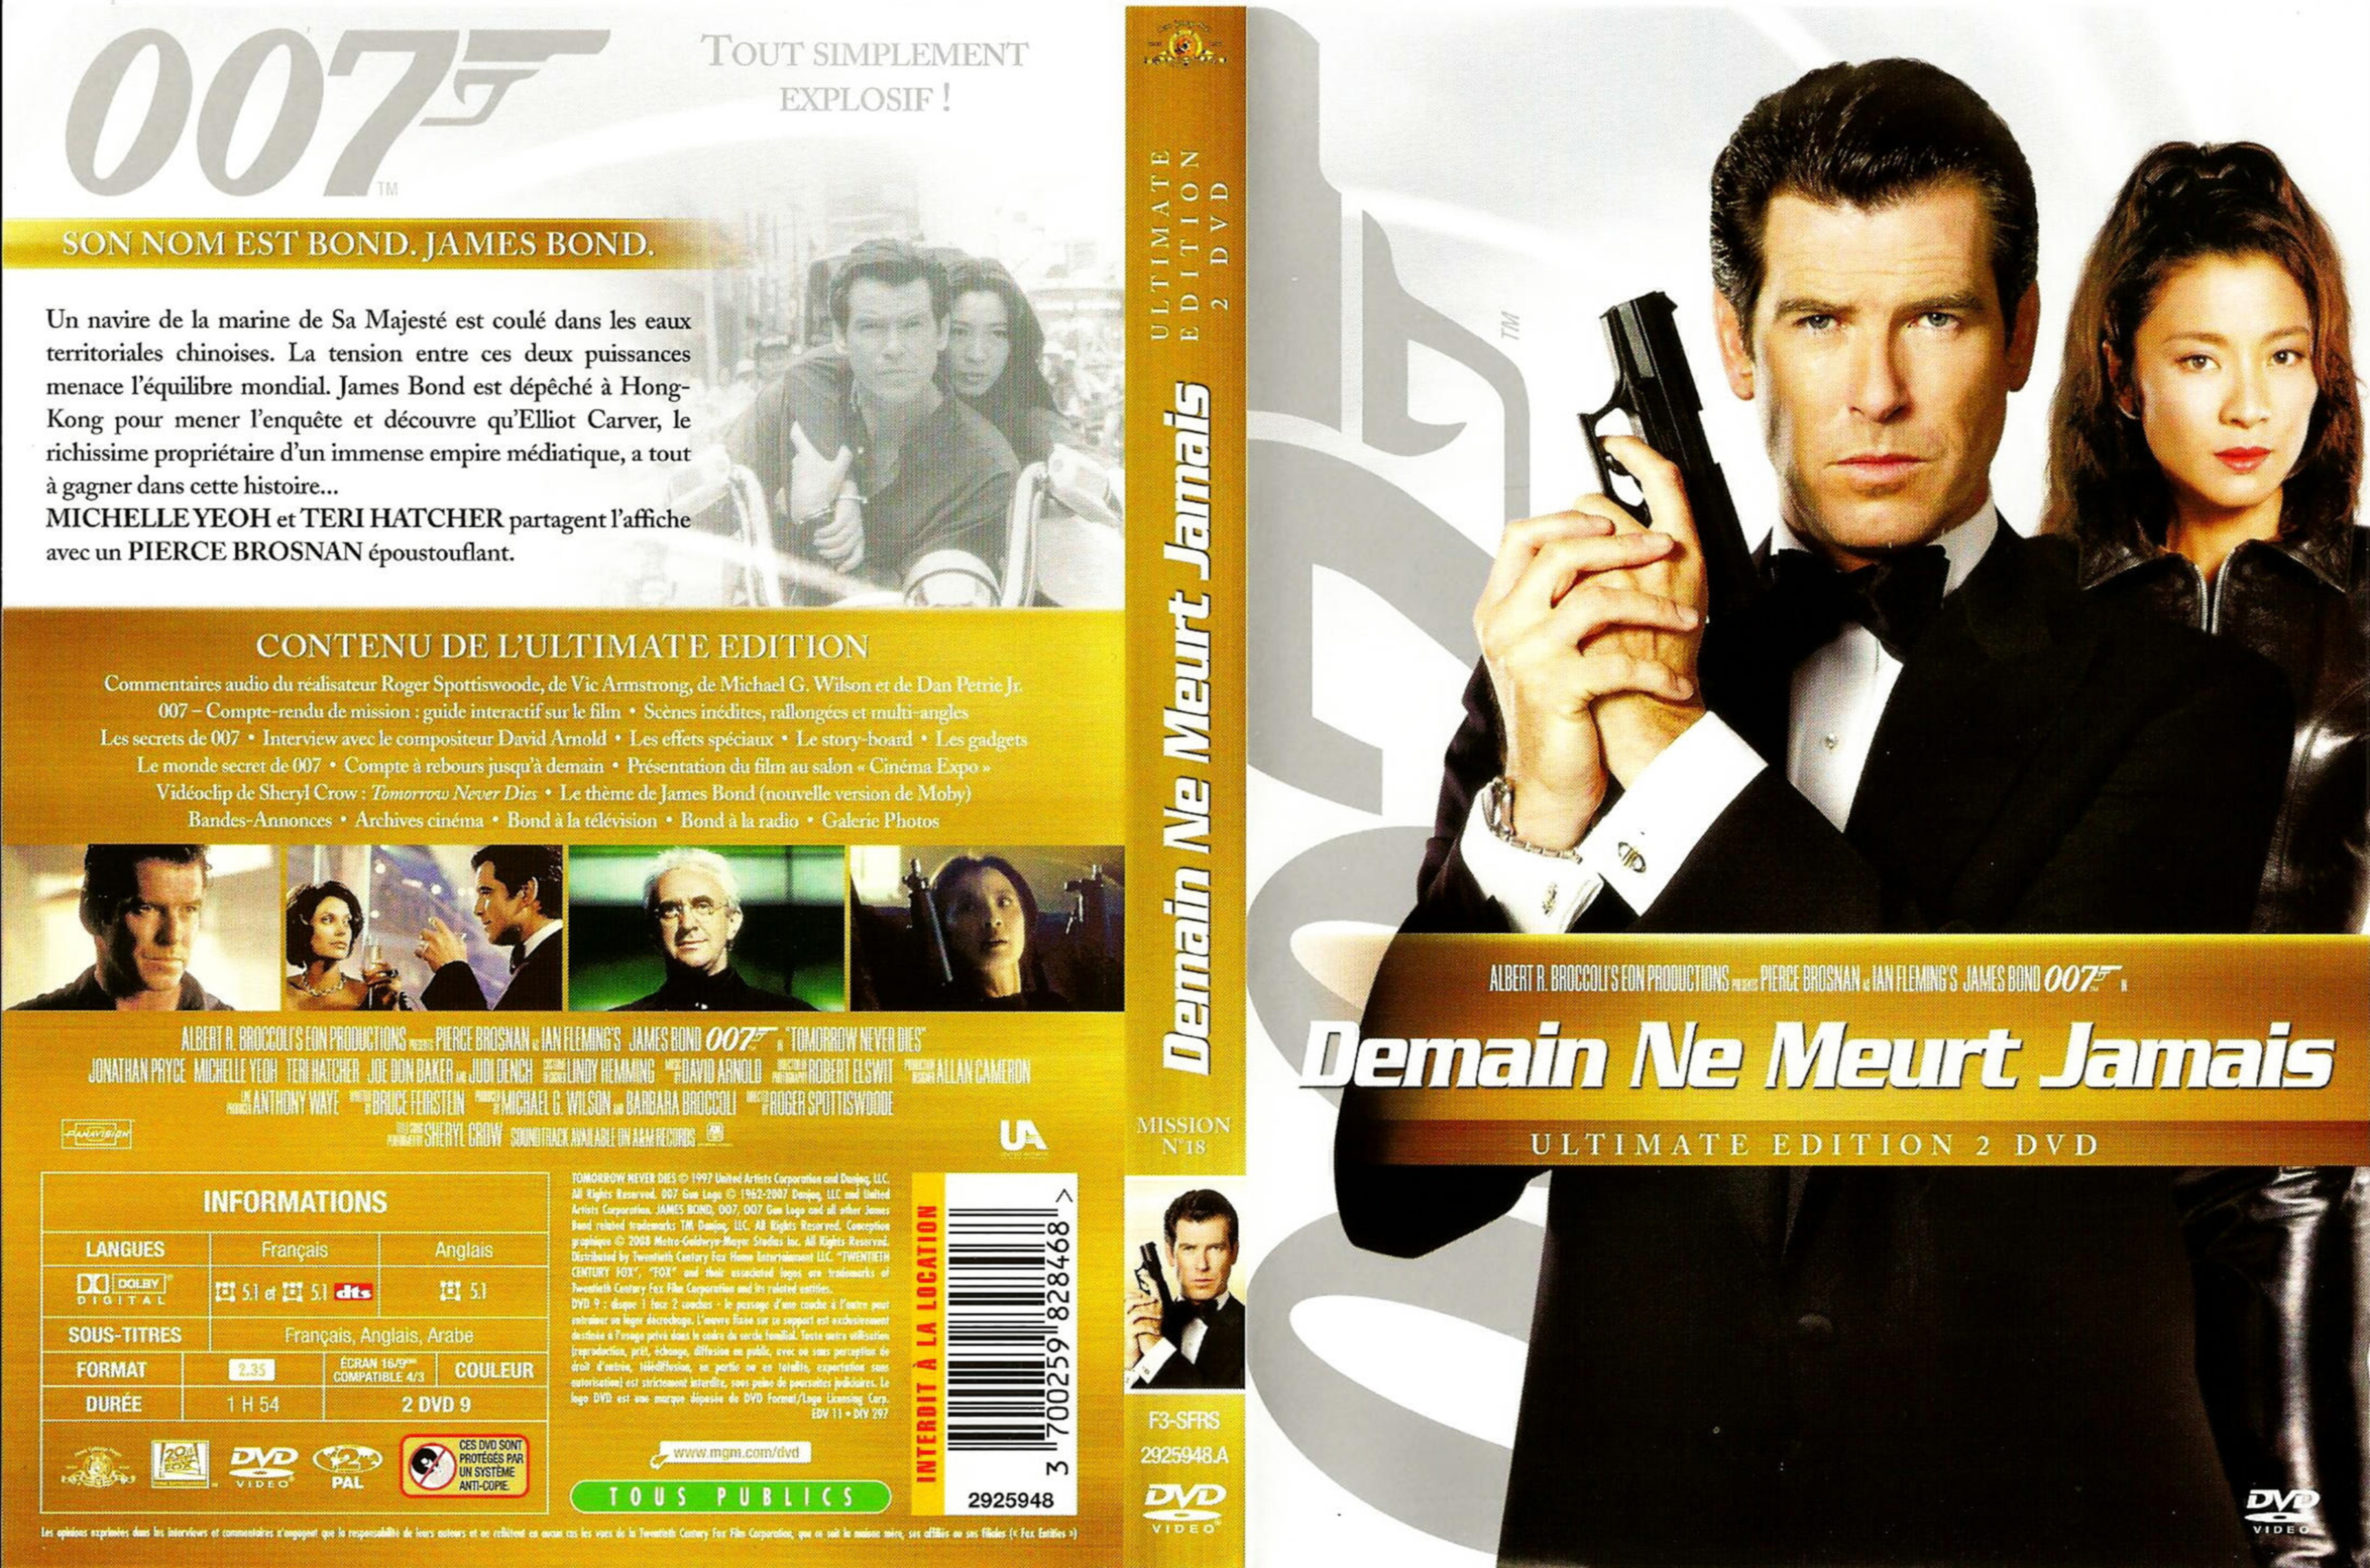 Jaquette DVD James Bond 007 Demain ne meurt jamais v3